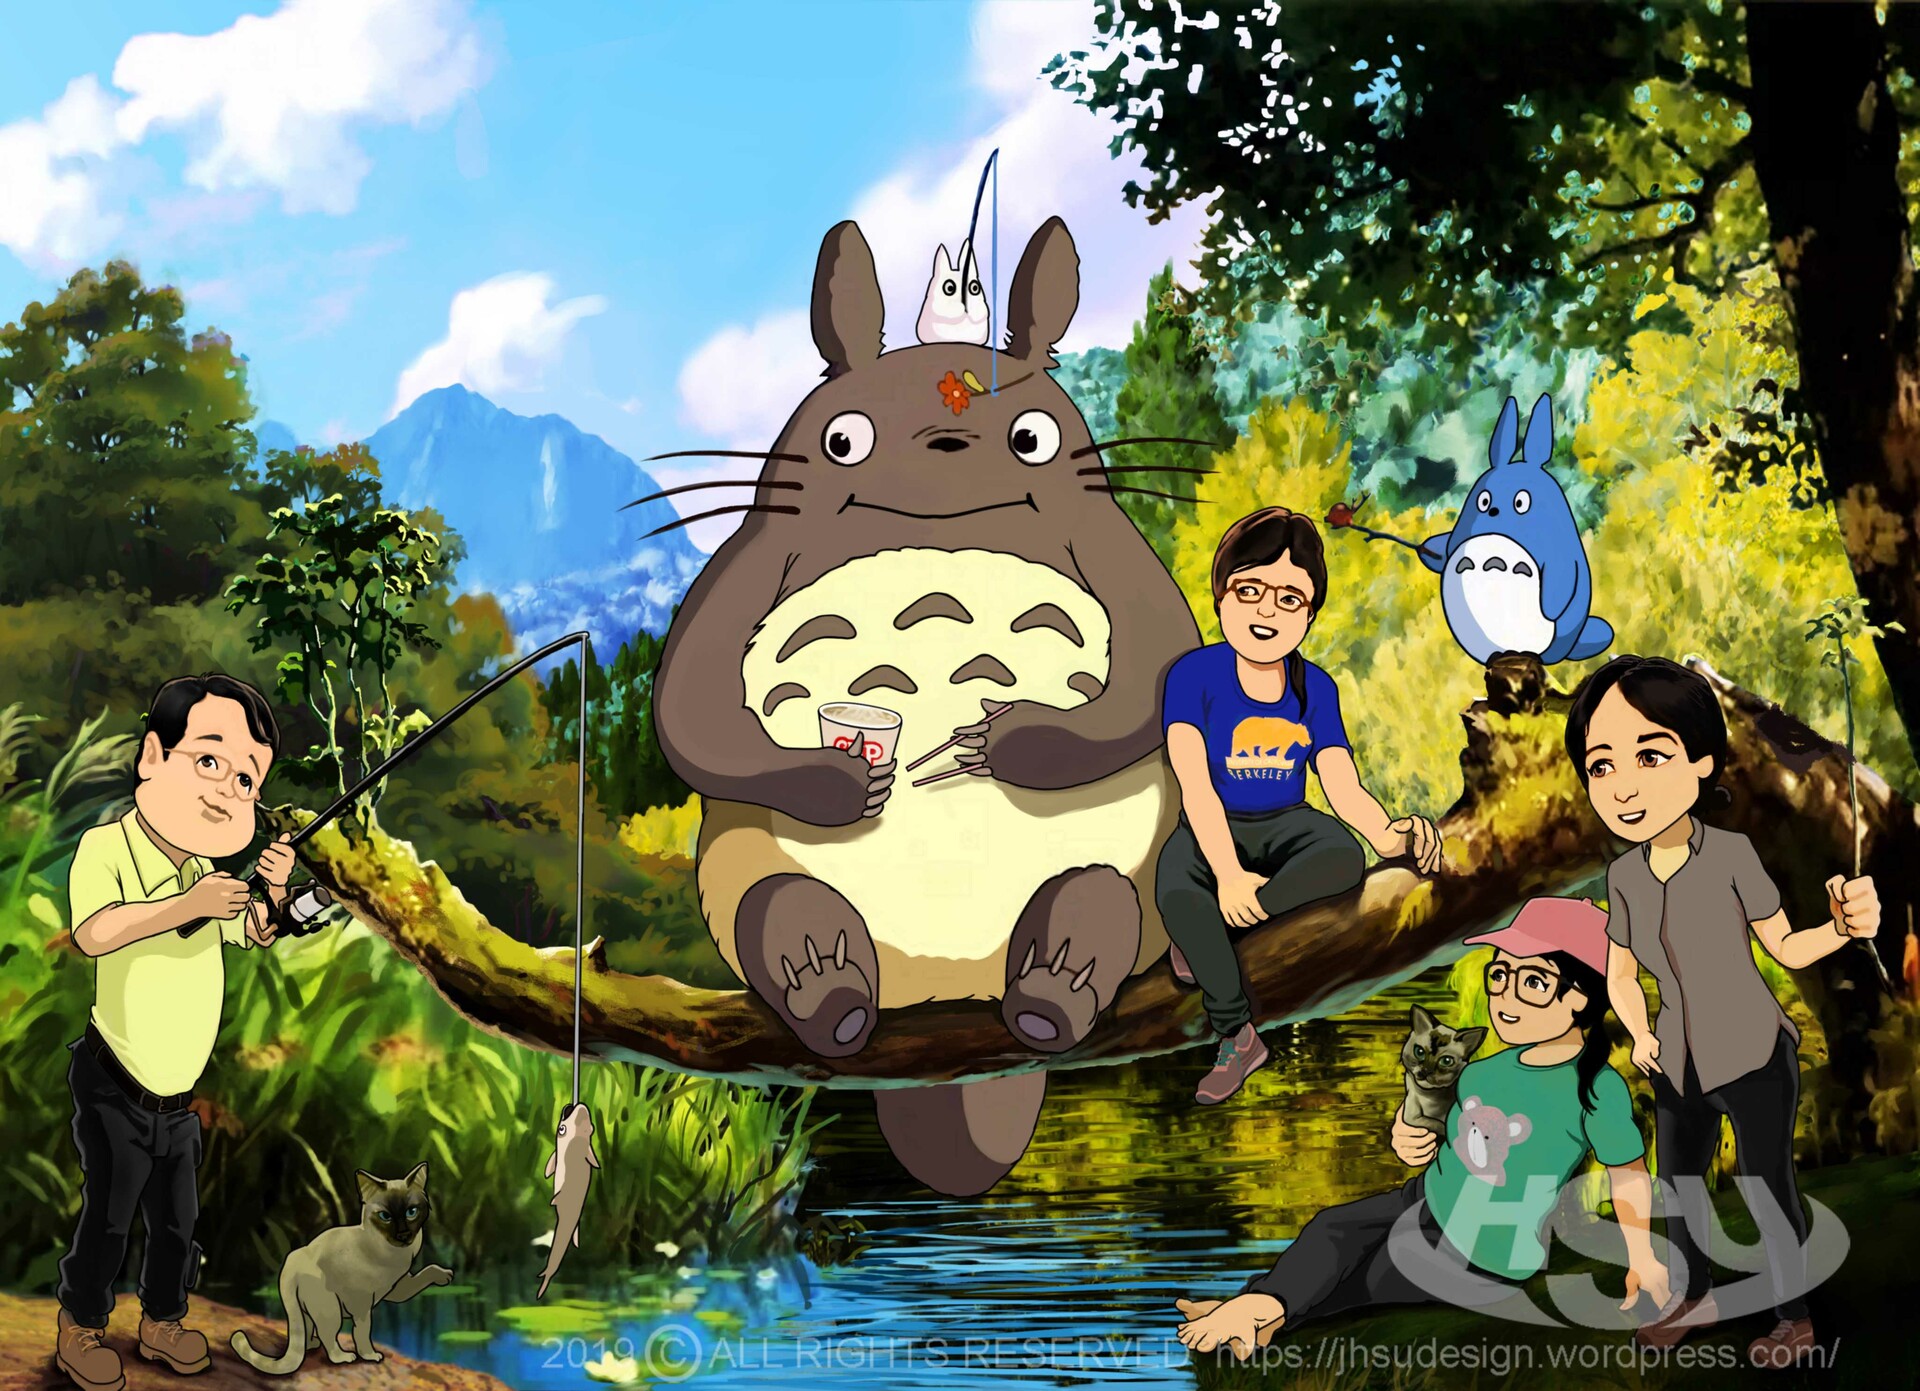 Ghibli style illustration.